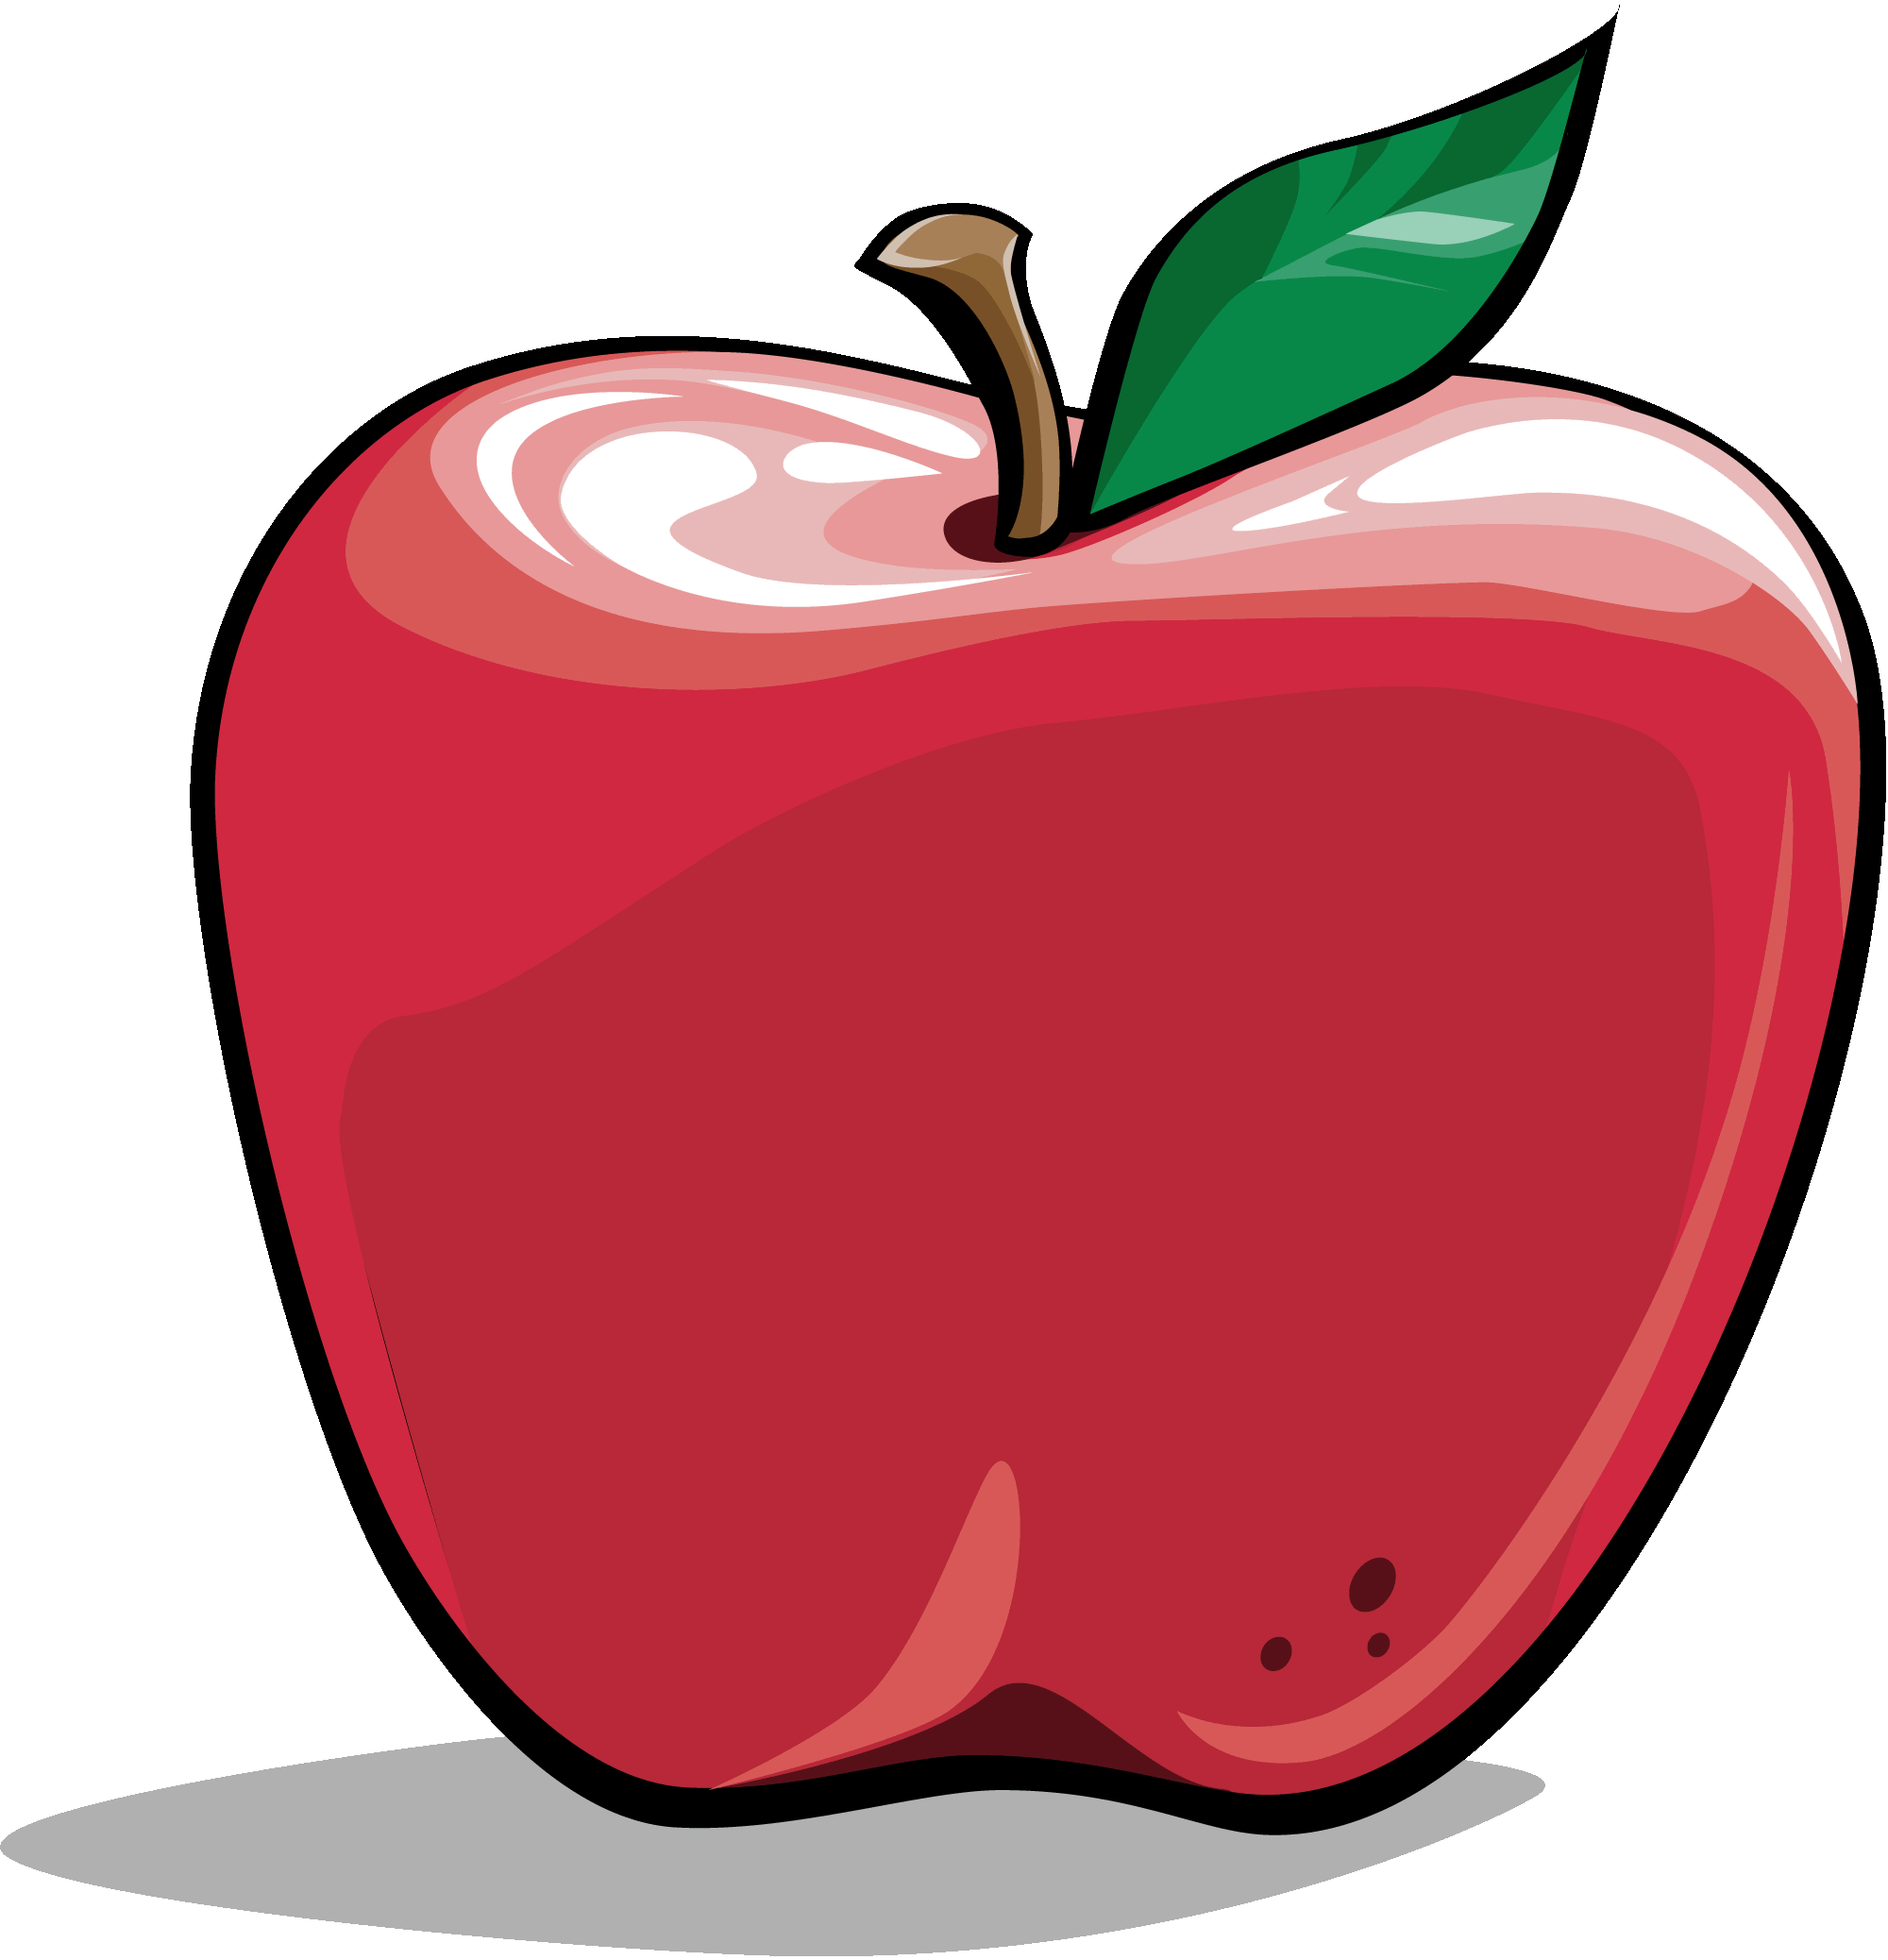 Red school apple clipart